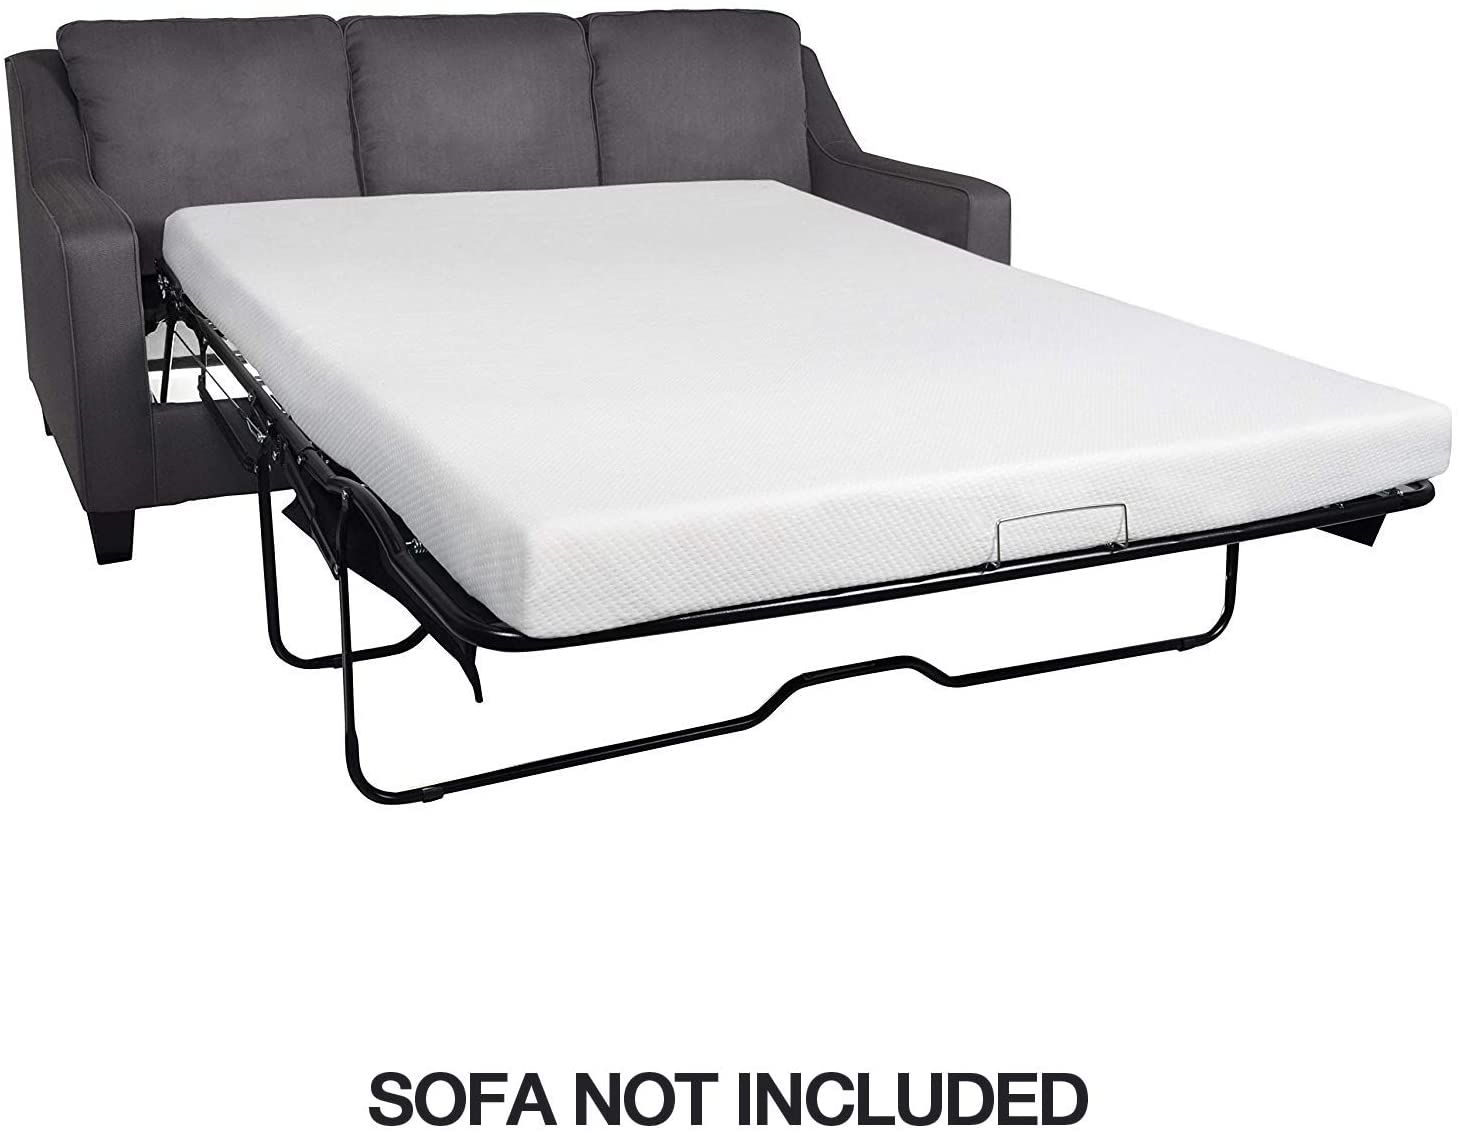 memory foam replacement mattress for sofa bed